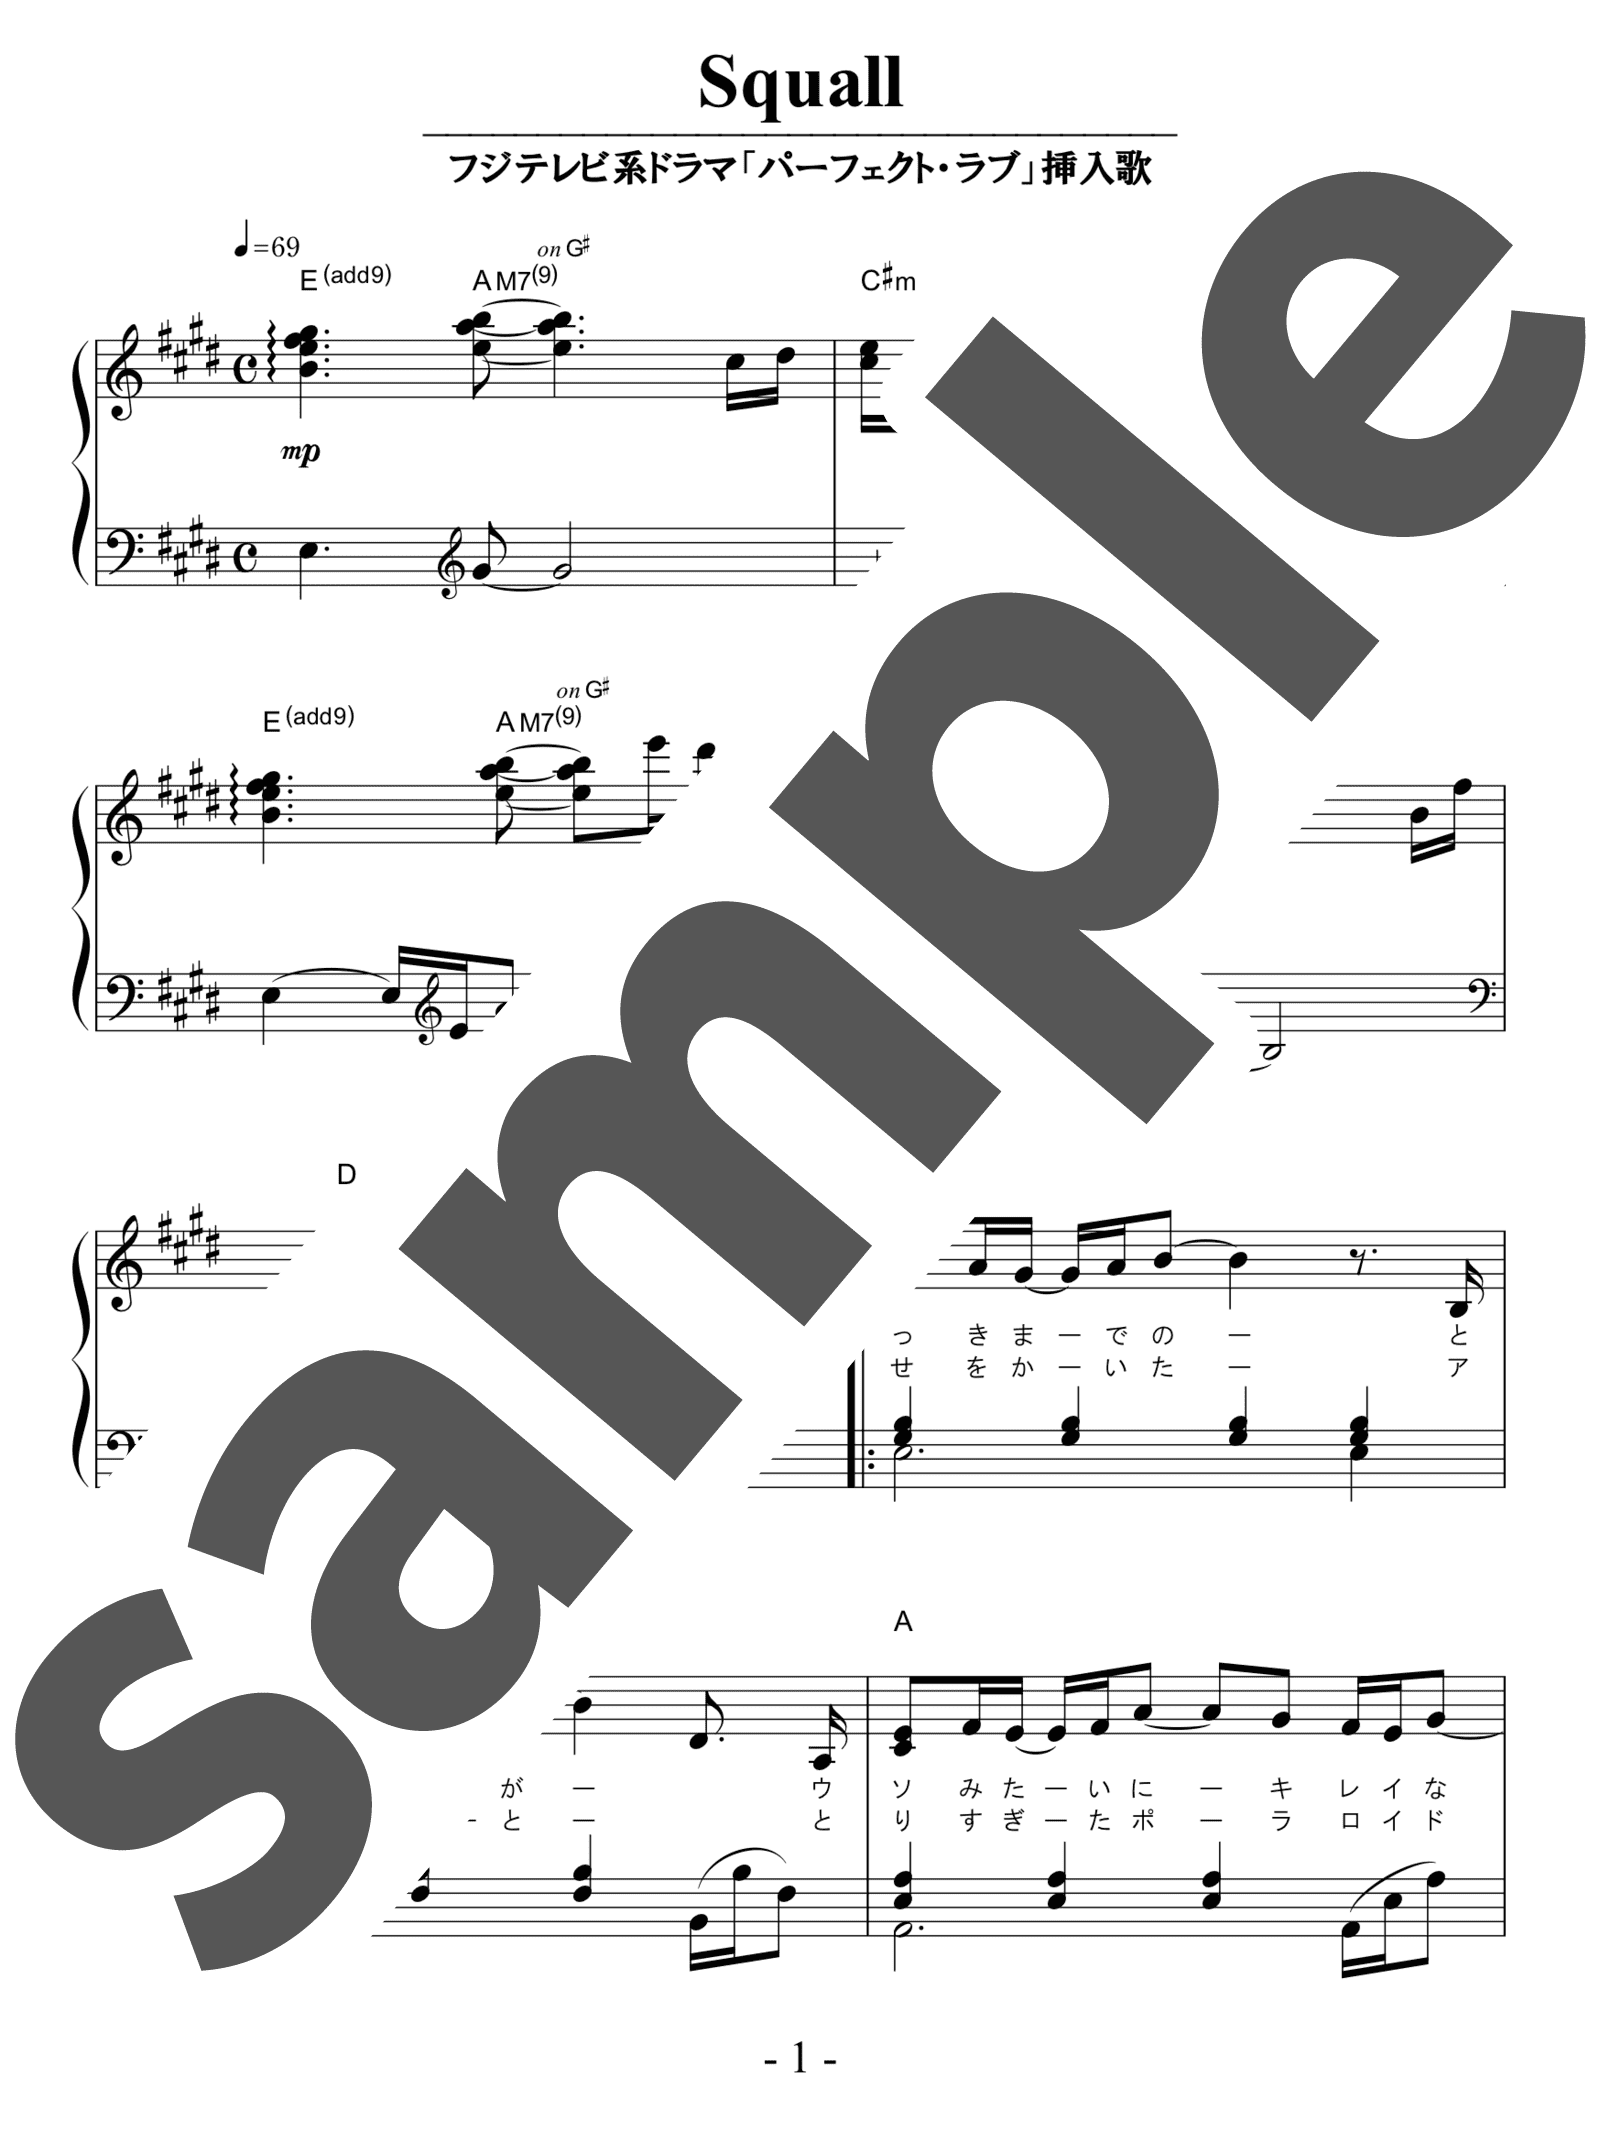 「Squall」のサンプル楽譜